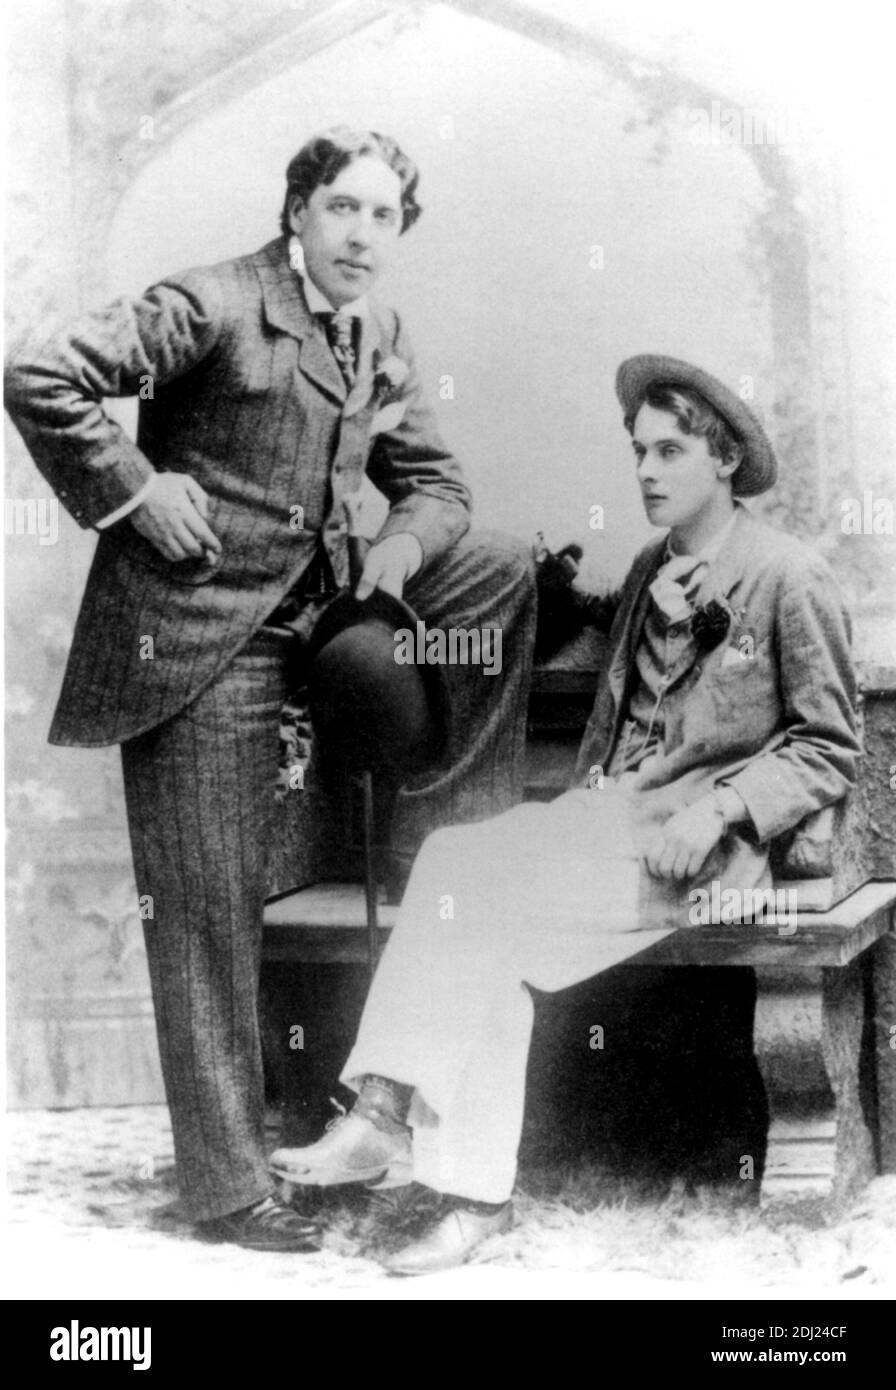 1893 , May , Oxford , GRANDE-BRETAGNE : l'écrivain et dramaturge irlandais OSCAR WILDE ( 1854 - 1900 ) avec son jeune amant, l'Éternel ALFRED DOUGLAS ( Bosie ) , photo de Gillman & Co., Oxford - SCRITTORE - LETTERATURA - LITTÉRATURE - POÈTE - POETA - POESIA - DRAMMATURGO - écrivain - écrivain - écrivain - THÉÂTRE - POÉSIE - cravatta - cravate - collier - colletto - fazzoletto nel taschino - pochette - DANDY - GAY - HOMOSEXUALITÉ - HOMOSEXUEL - omosessuale - Omosessualità - LGBT - carnation verte - garofano verde - paglietta - pantaloni bianchi - pantalon blanc --- Archivio GBB Banque D'Images